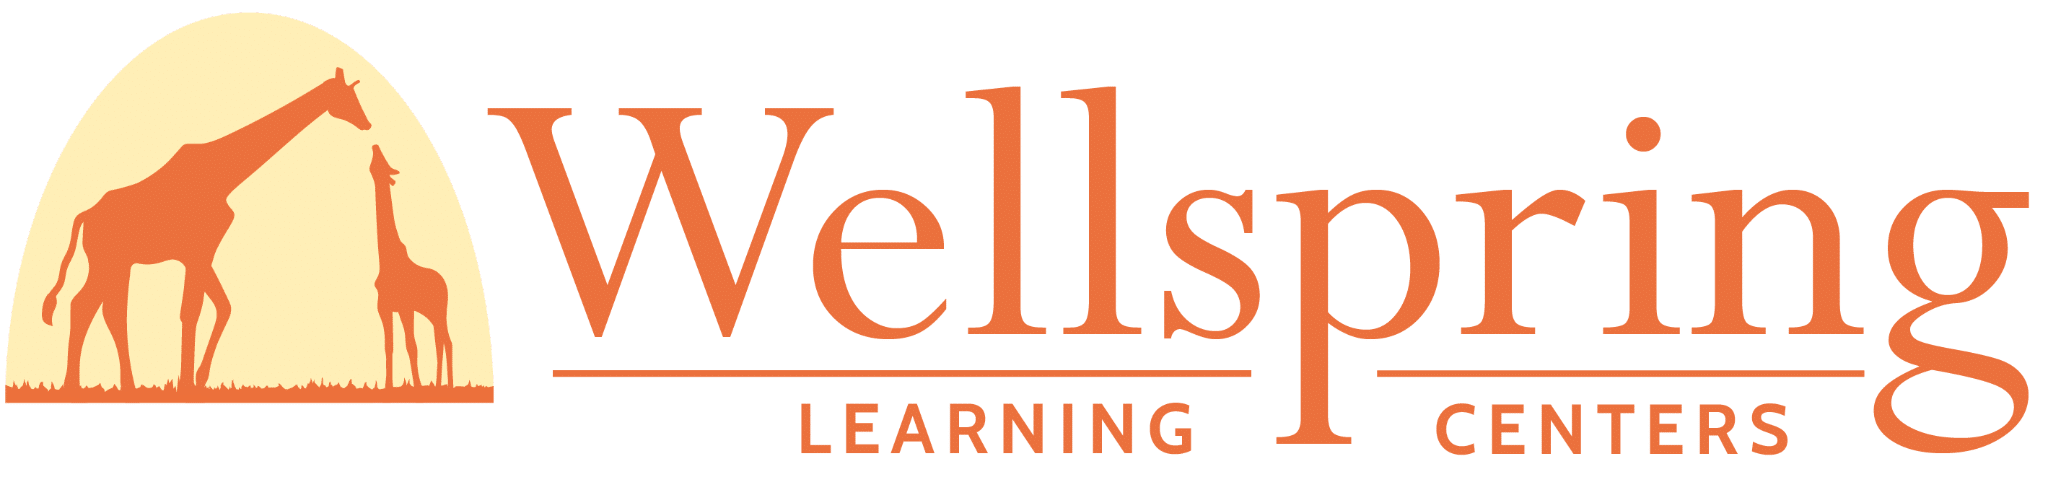 Wellspring Learning Centers logo